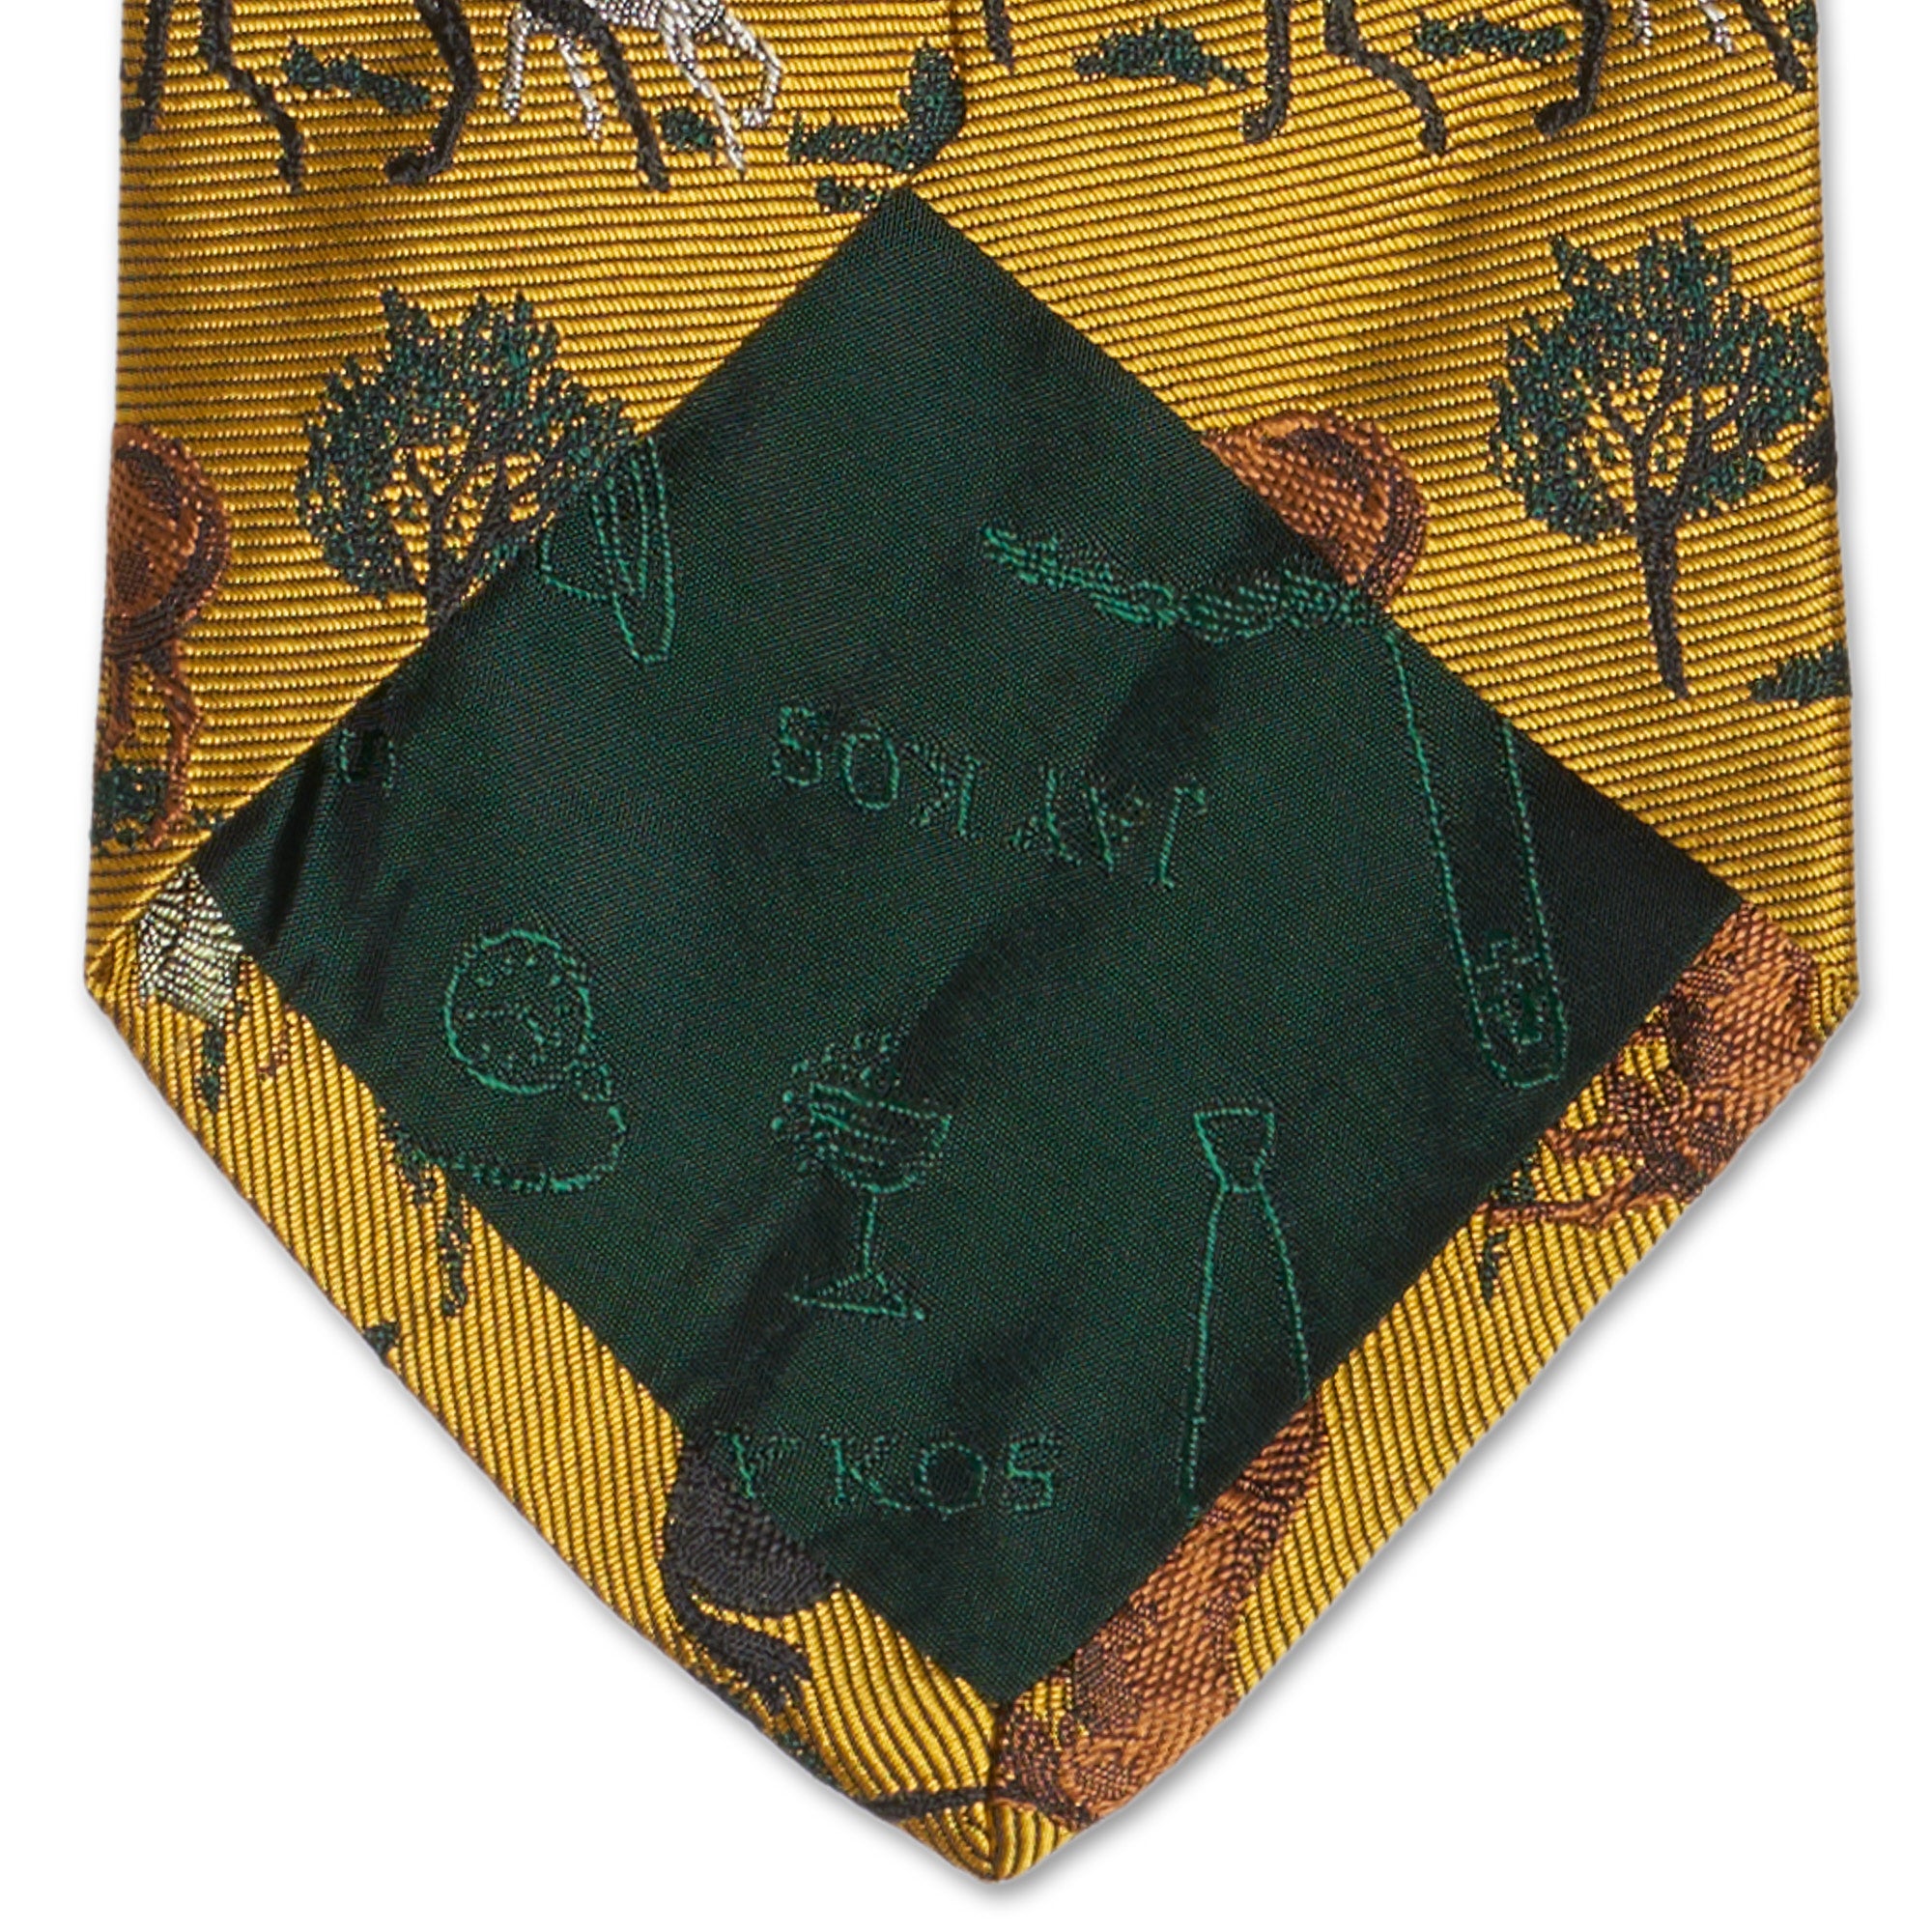 JAY KOS New York Handmade Yellow Horse Design Silk Tie JAY KOS